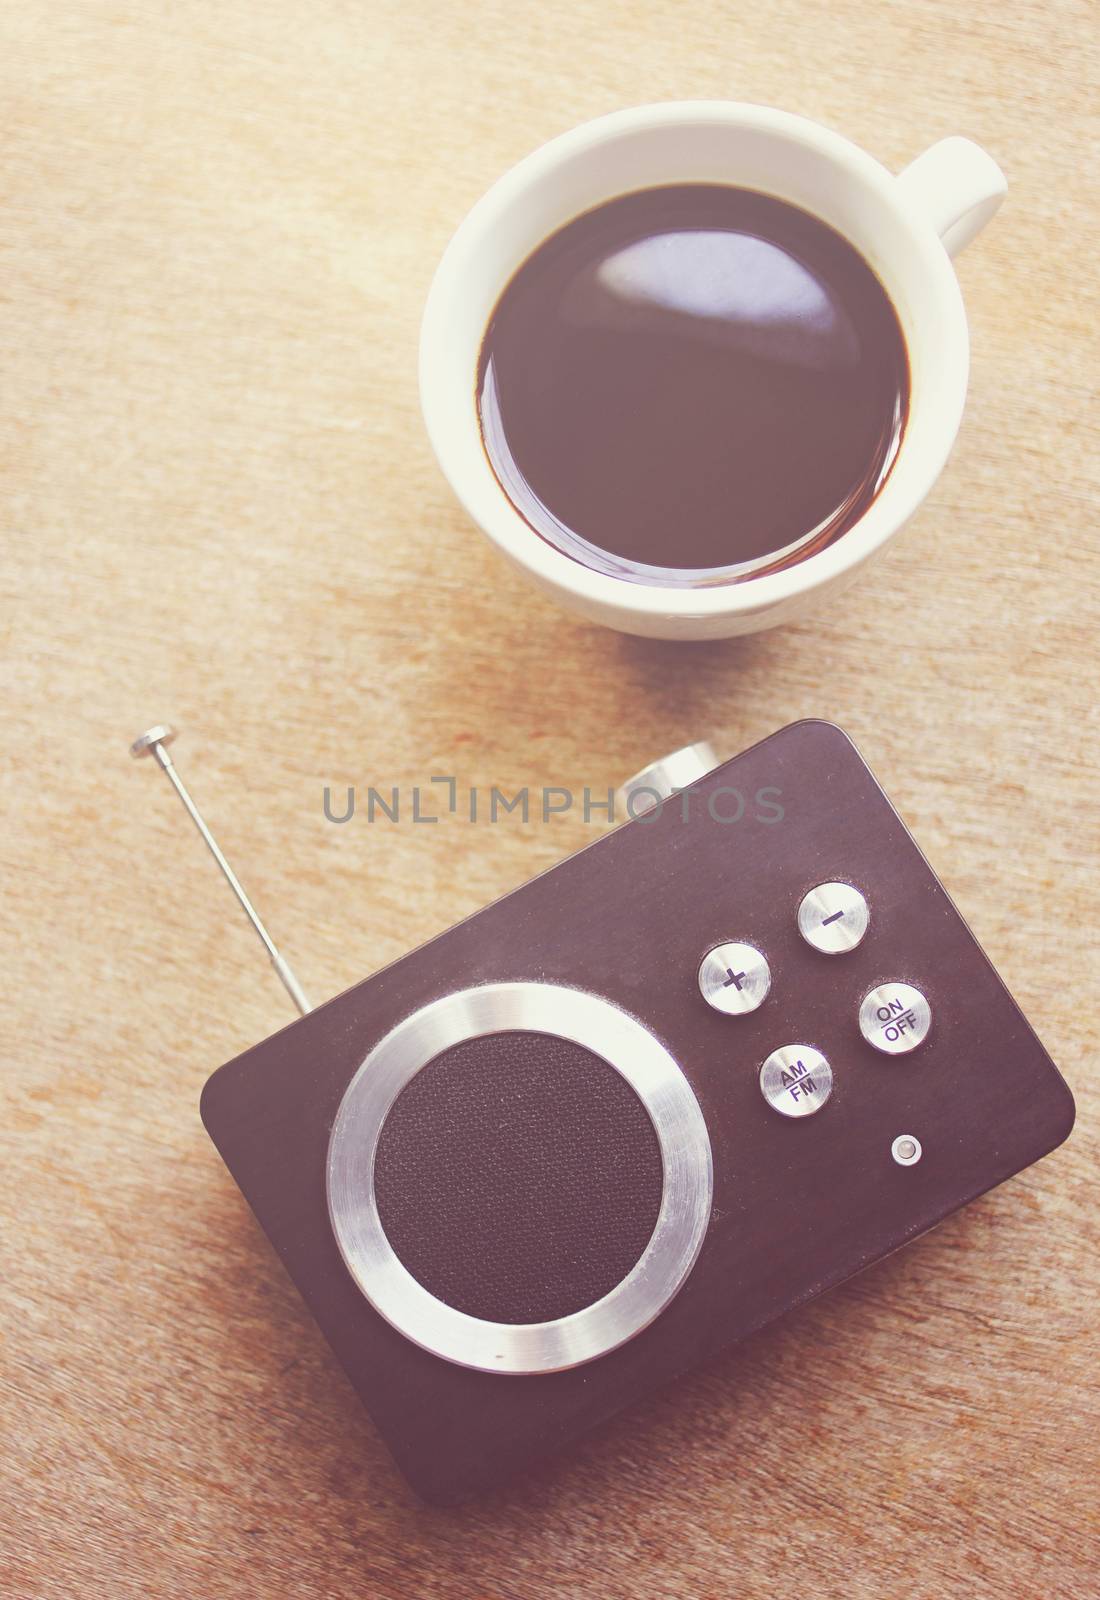 Retro radio and black coffee with retro filter effect